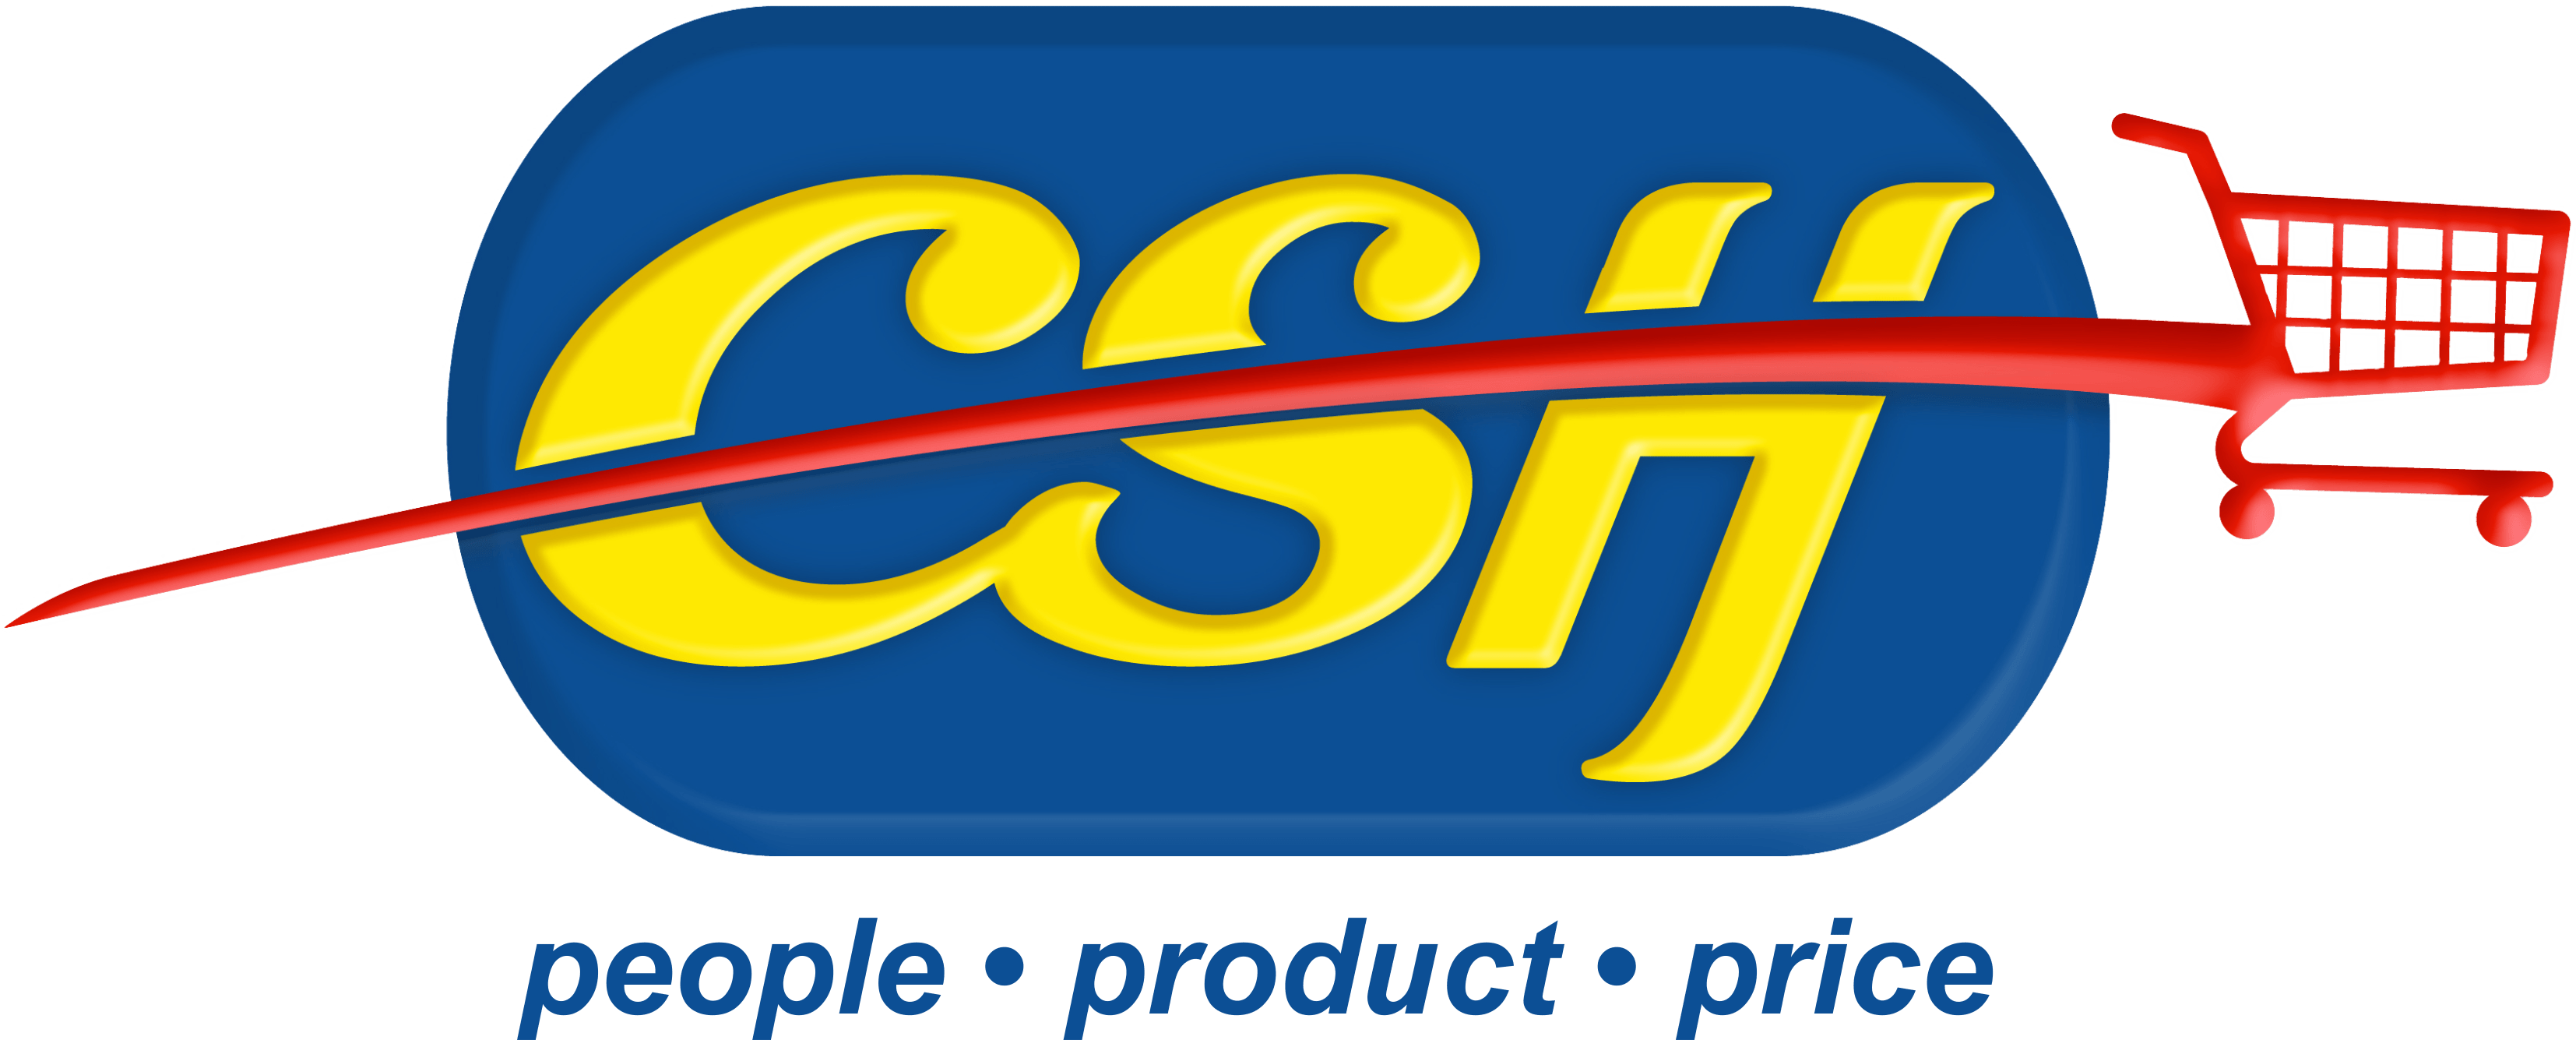 CSH Logo - CSH LOGO – Save A Lot